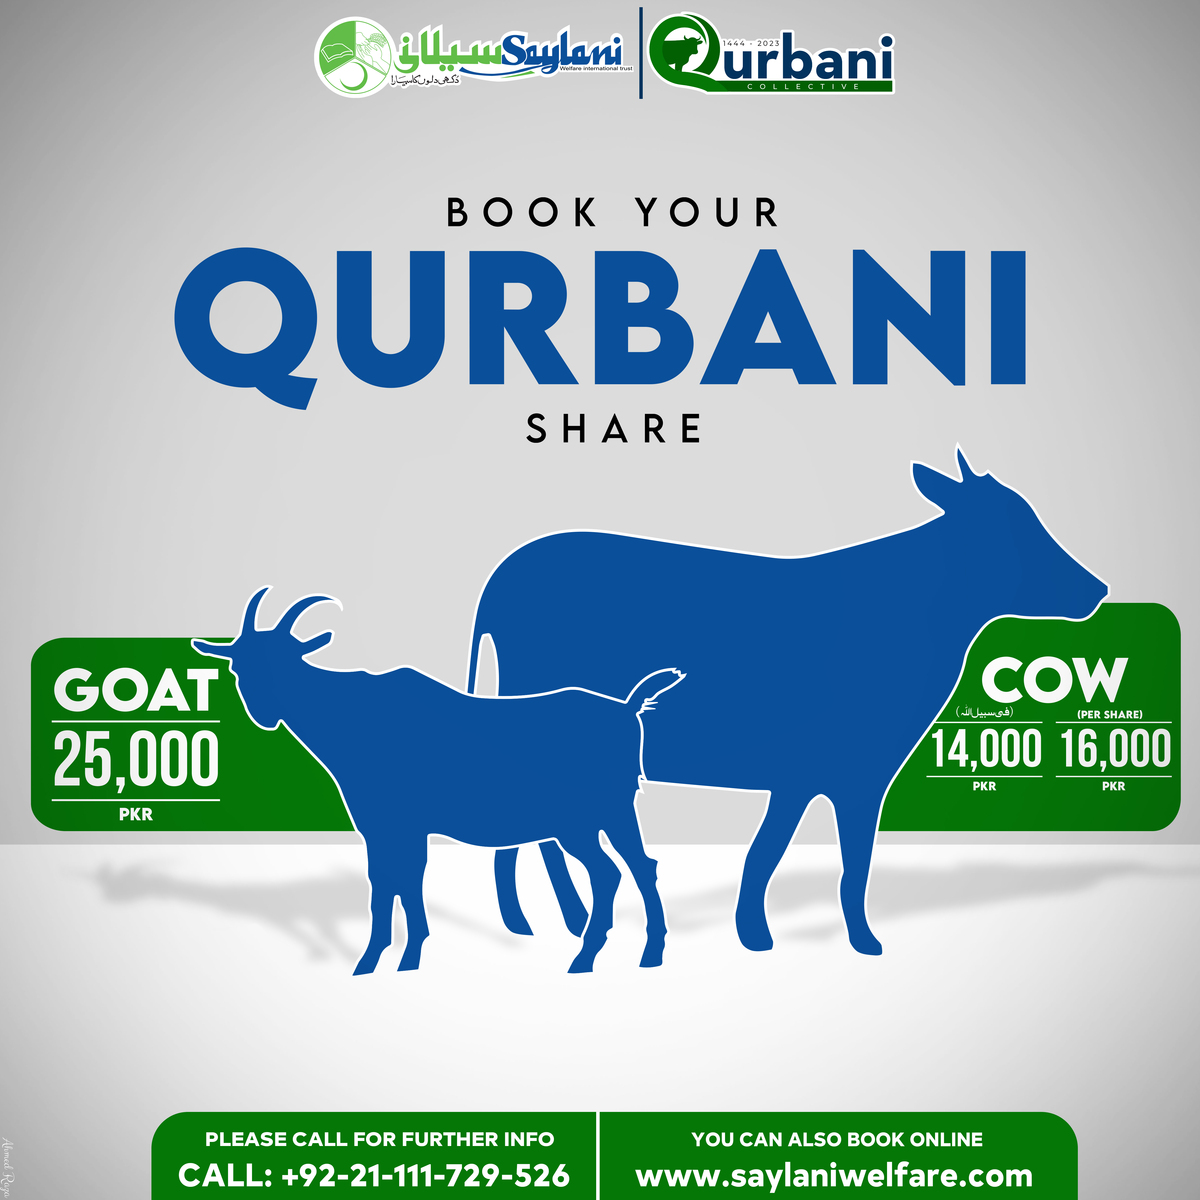 Book your Qurbani share online today and spread blessings this Eid!

Call UAN: +92-21-111-729-526 | 0311 1729526

Book Now:
qurbani.saylaniwelfare.com

#Saylani #Qurbani #EidAlAdha #Hisa #Pakistan #OnlineBooking #EidMubarak #ShareTheBlessings